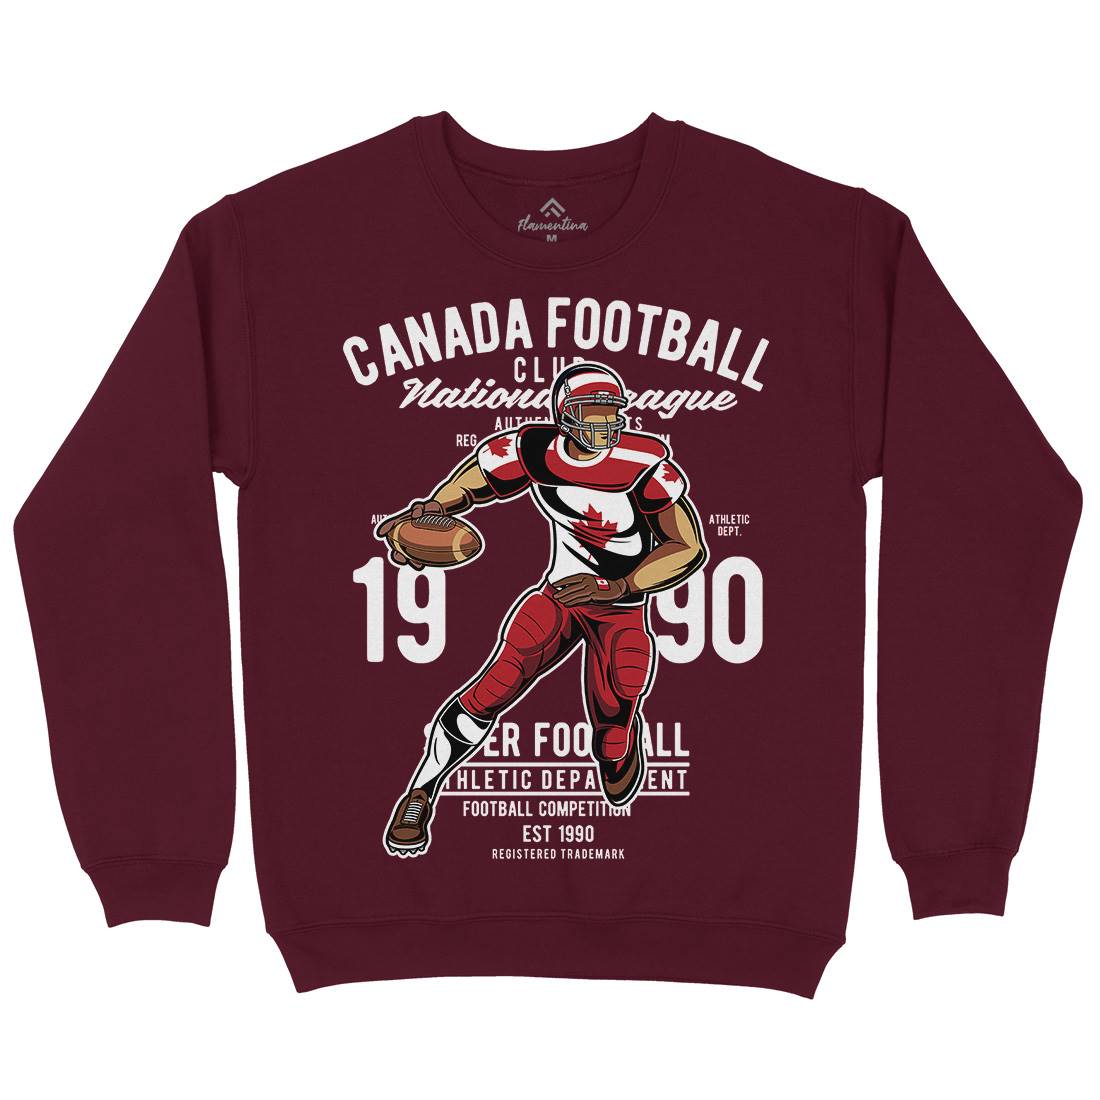 Canada Football Kids Crew Neck Sweatshirt Sport C326